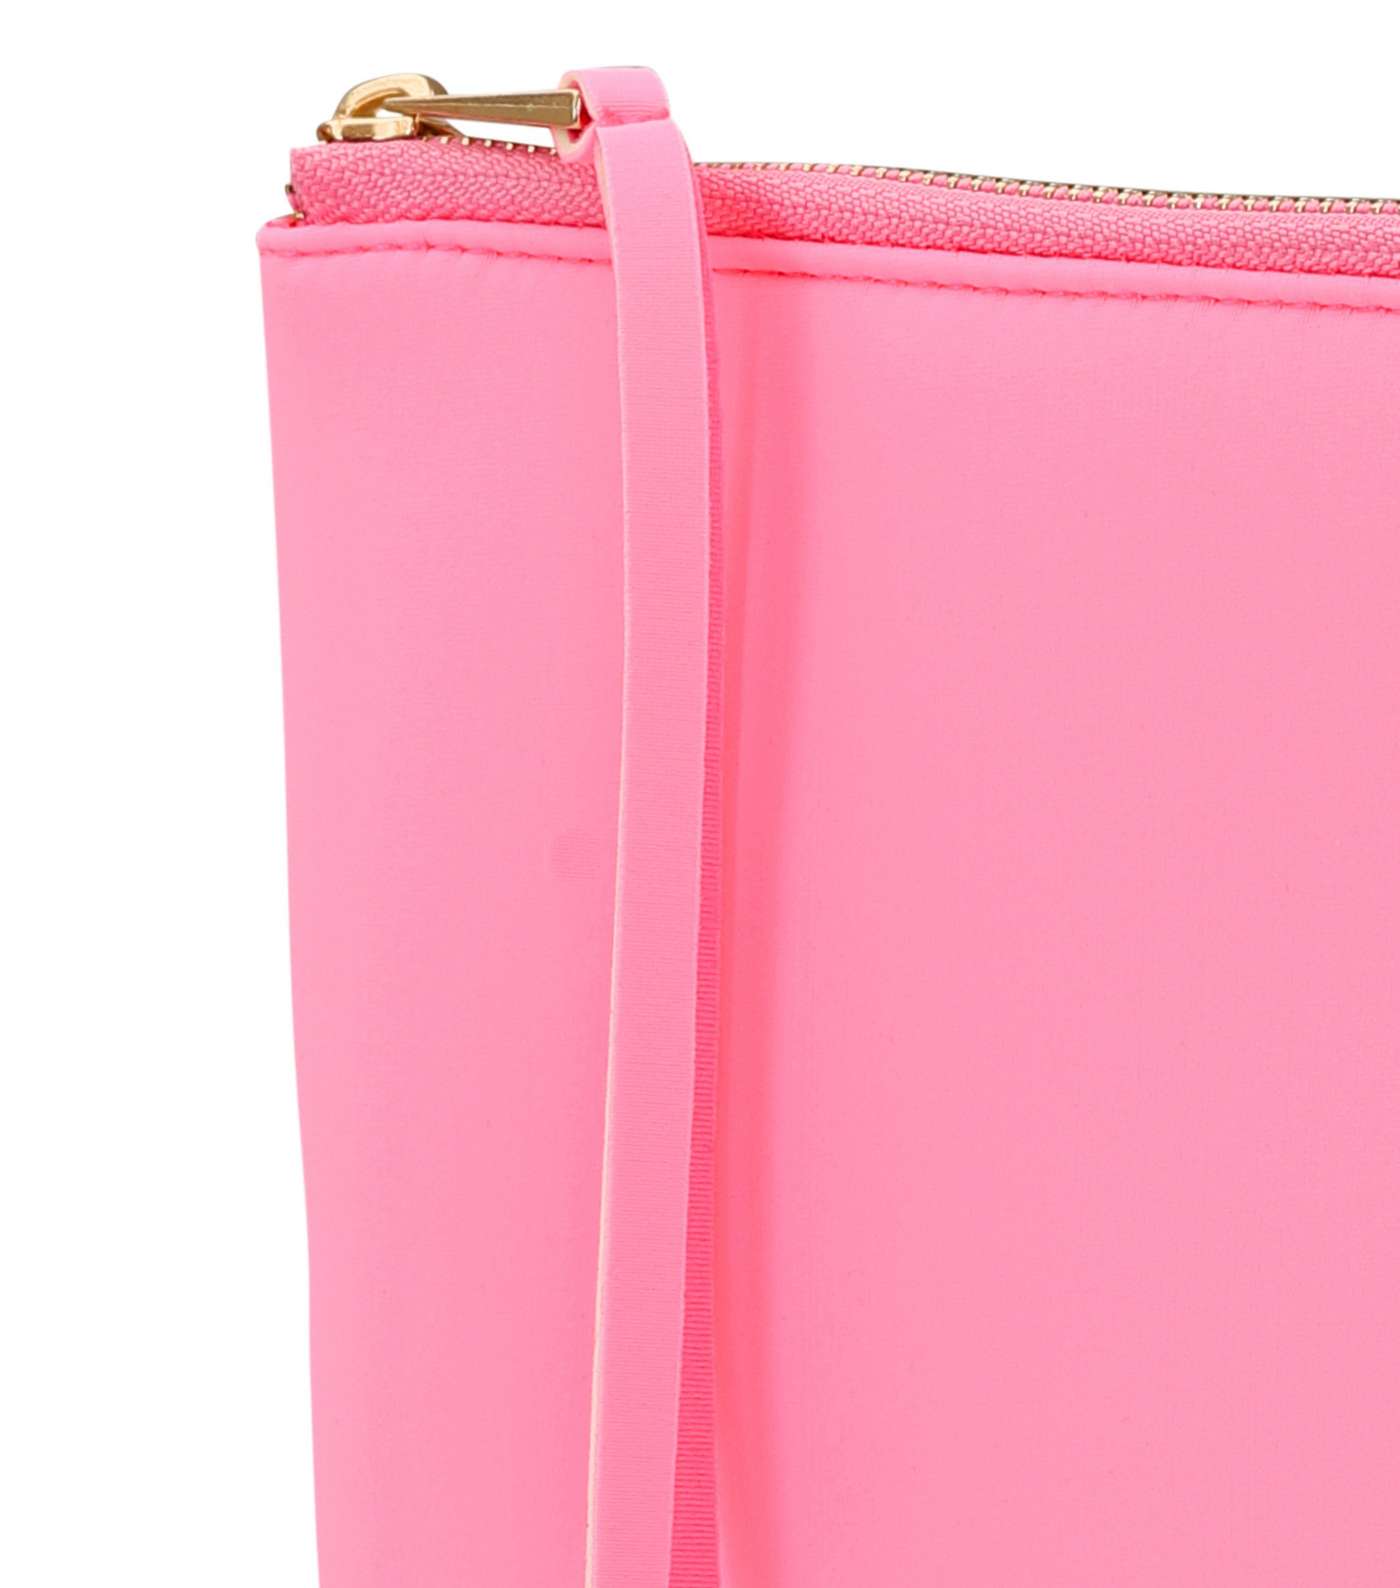 South Beach Bright Pink Wristlet Clutch Bag Image 4